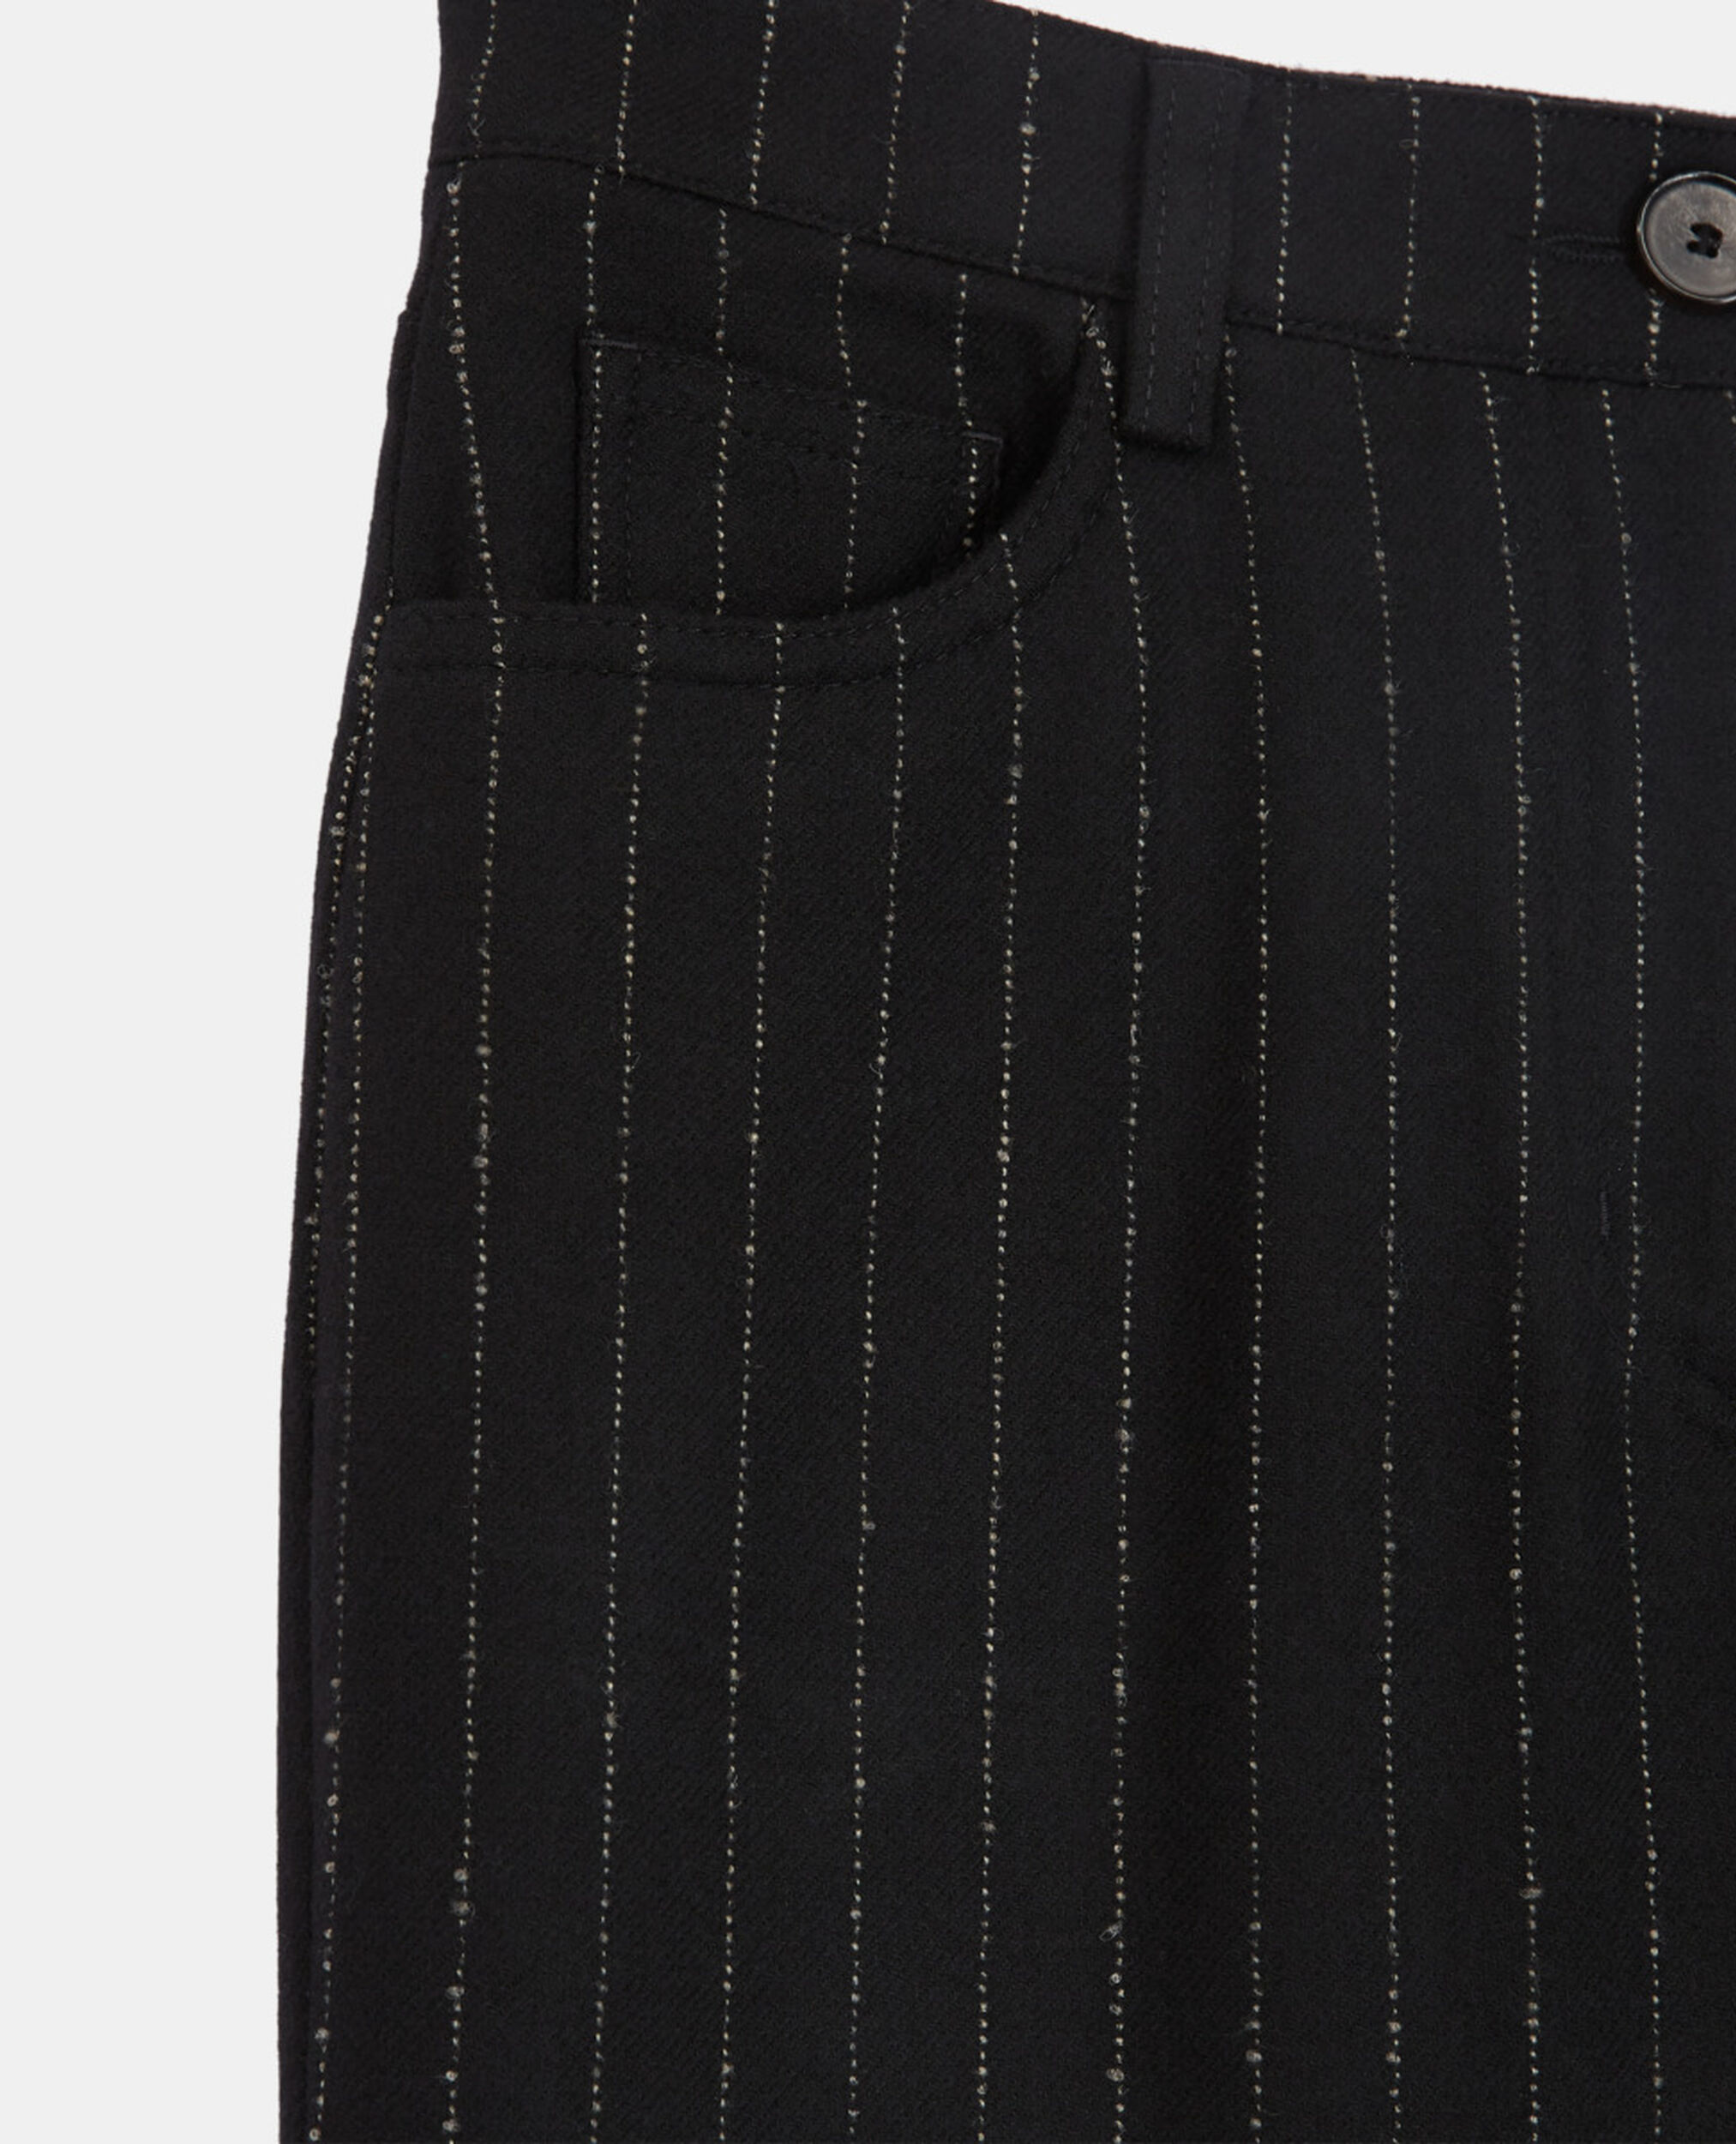 Striped wool suit pants, BLACK WHITE, hi-res image number null